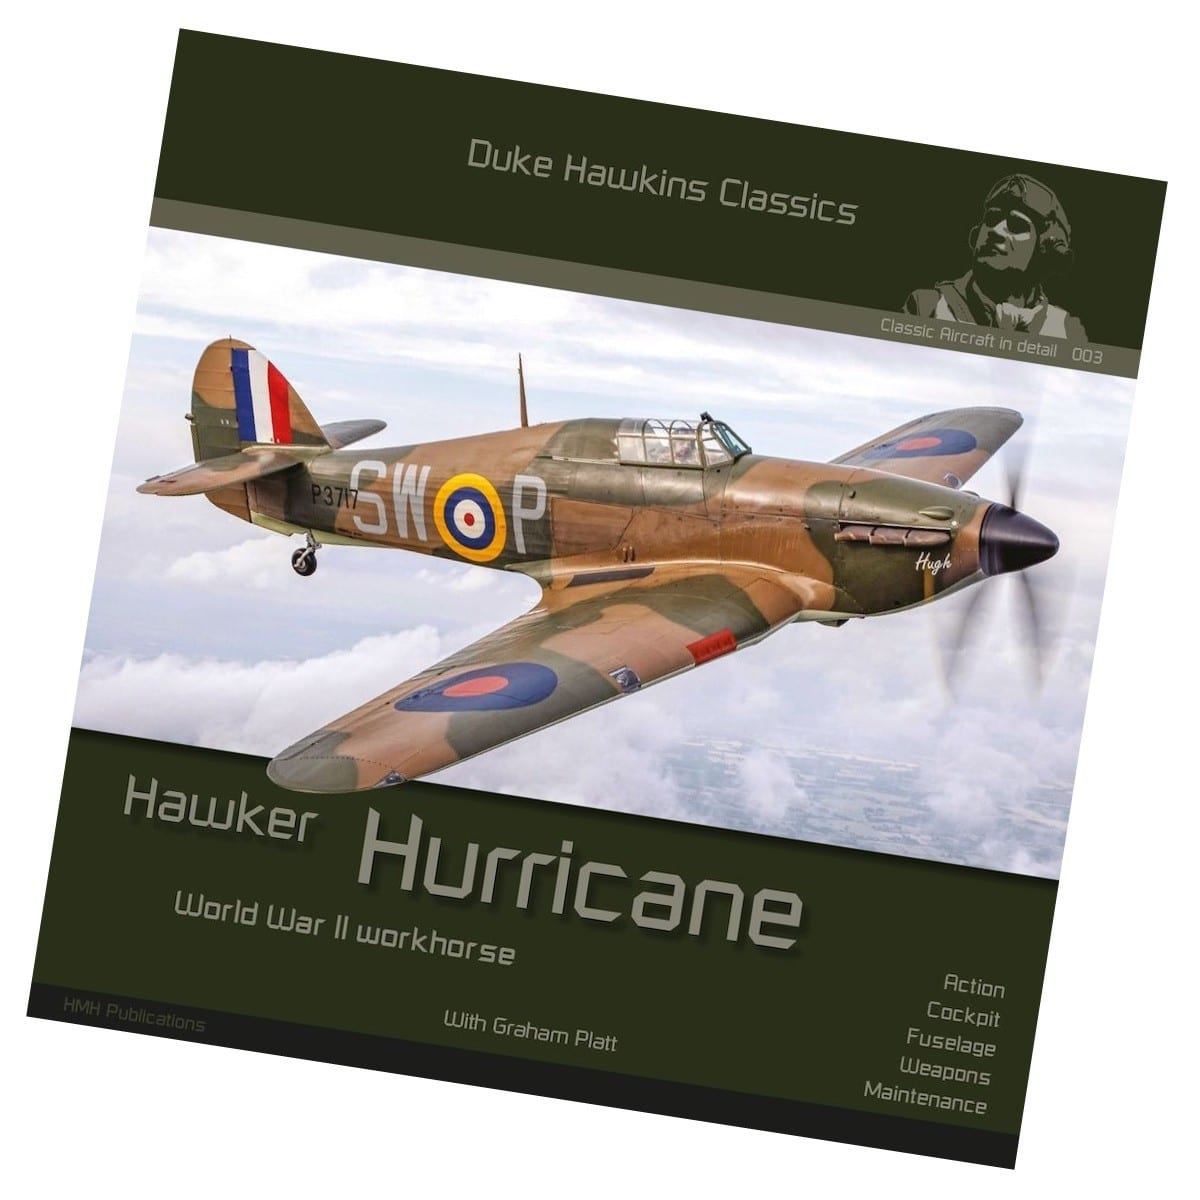 HMH Publication Announces New Book on the Hawker Hurricane